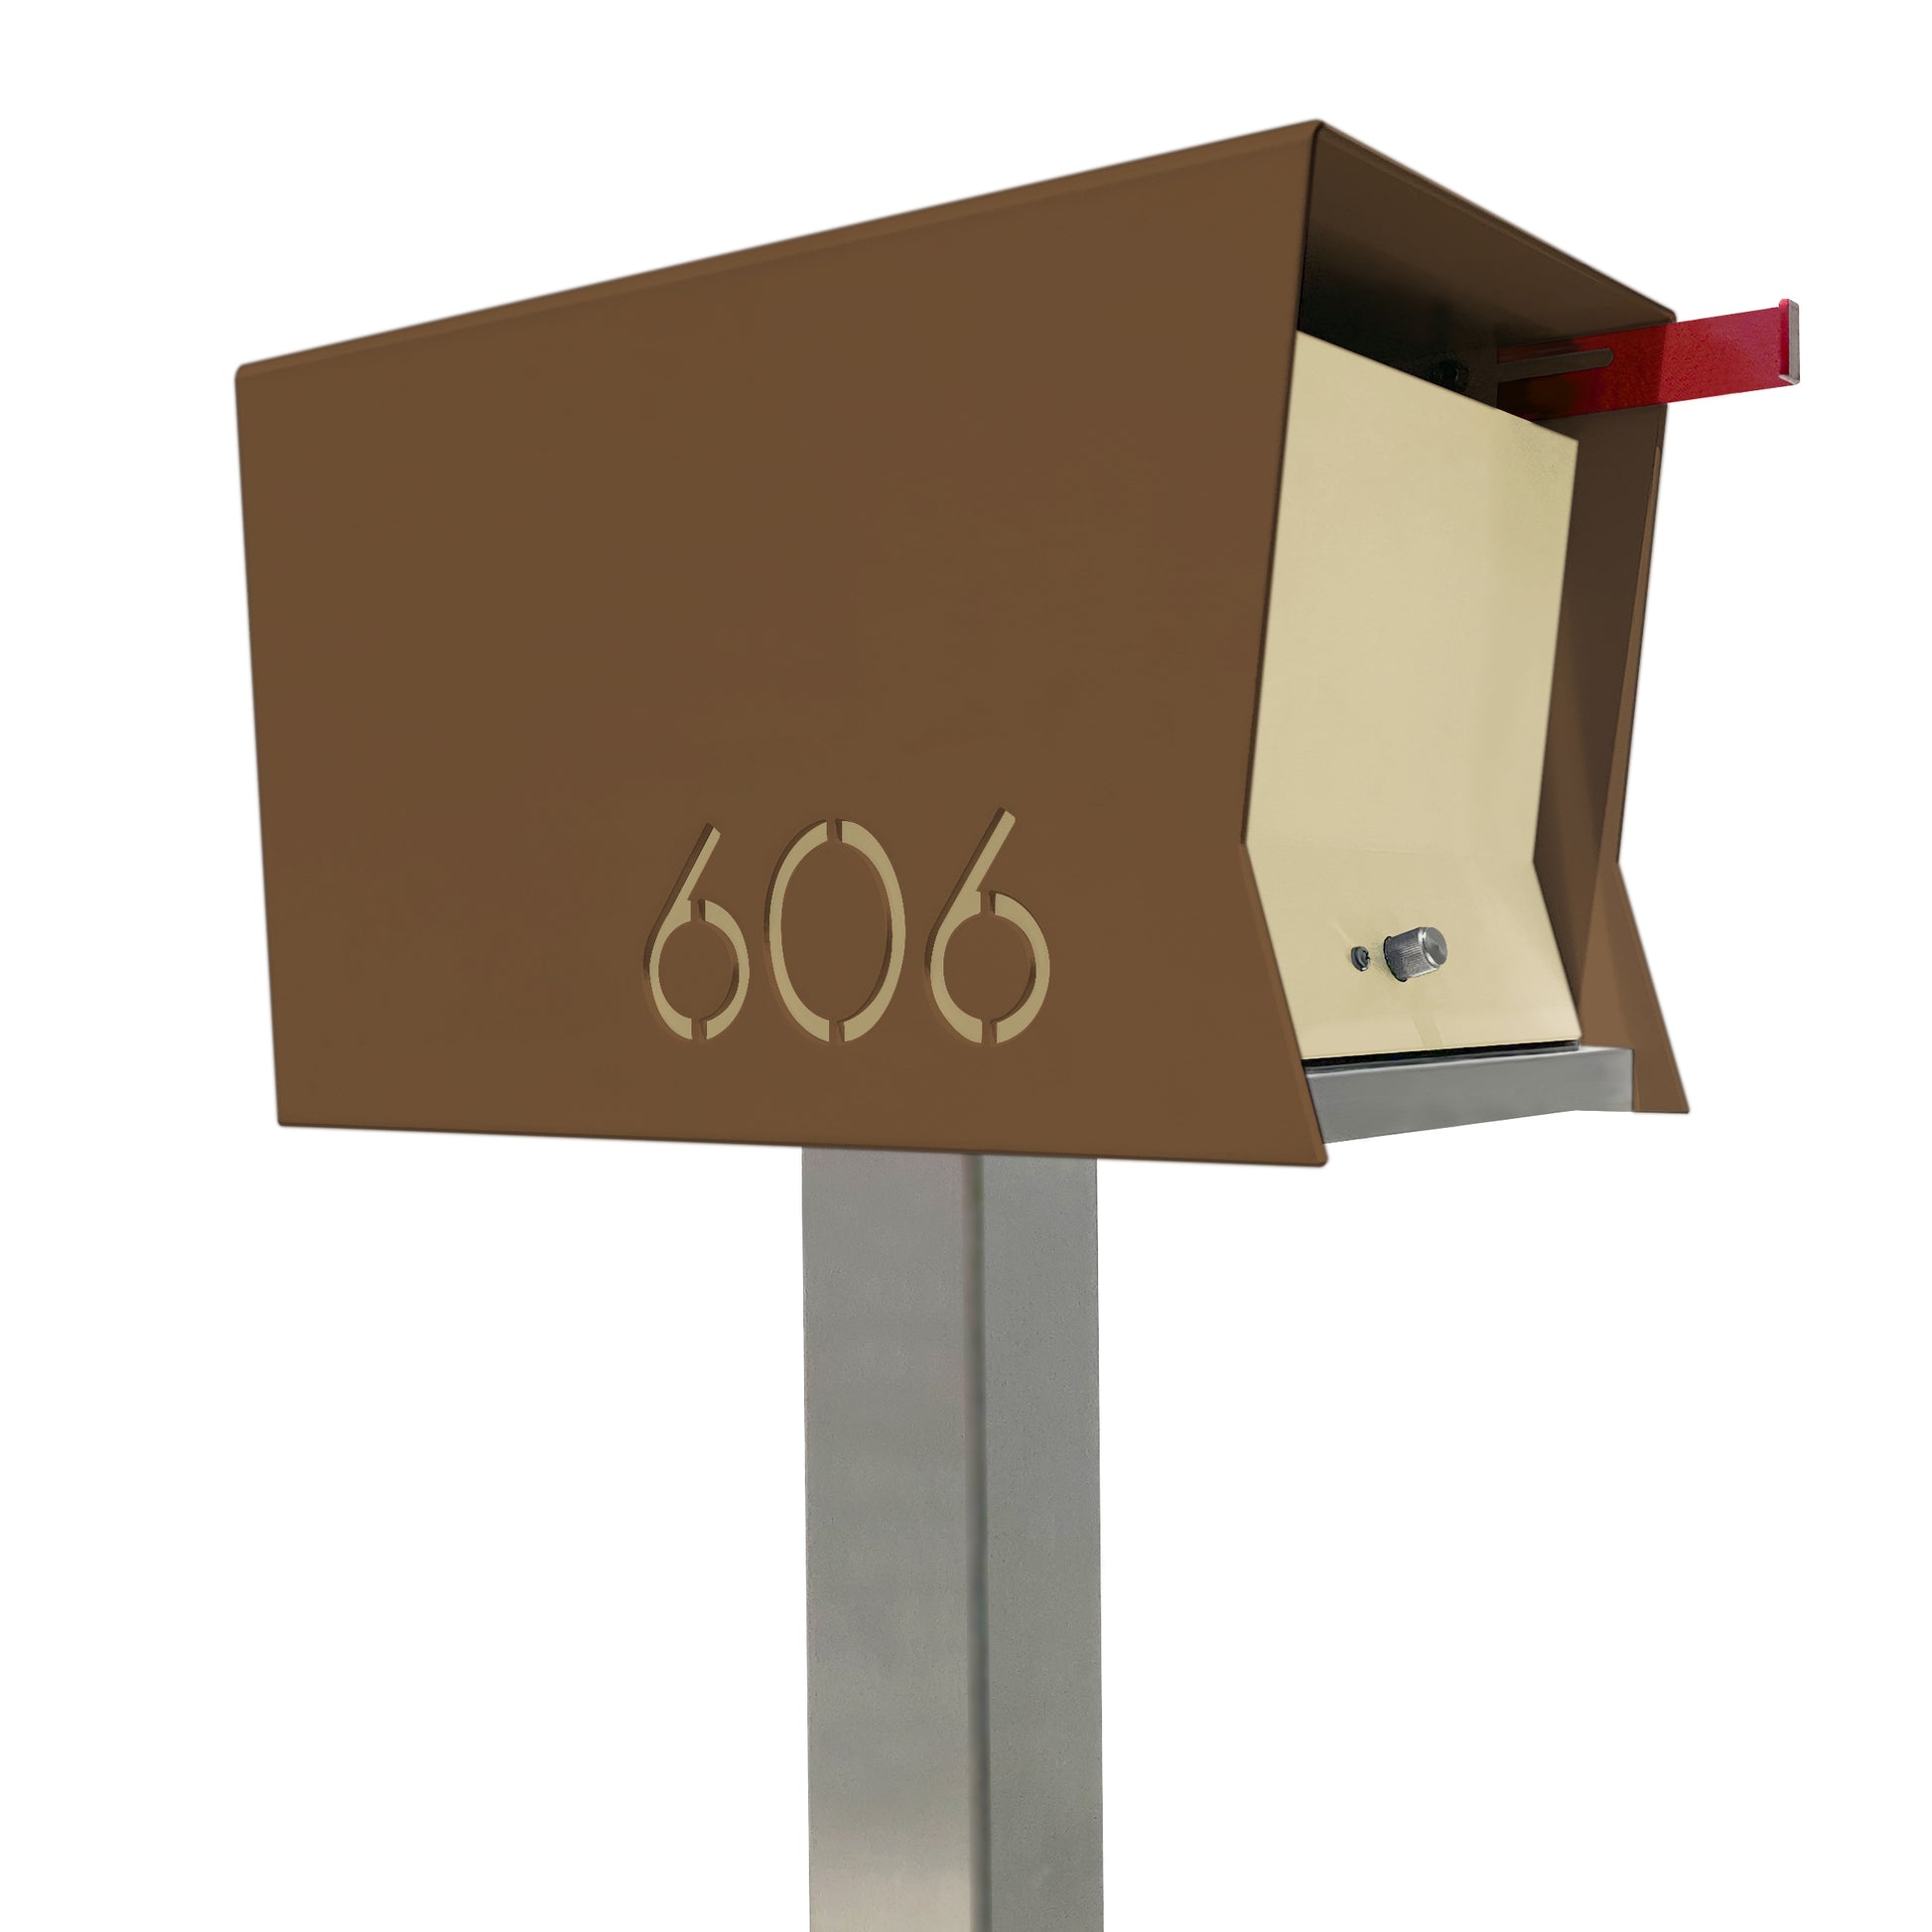 The Original Retrobox in COCONUT - Modern Mailbox brown and light brown